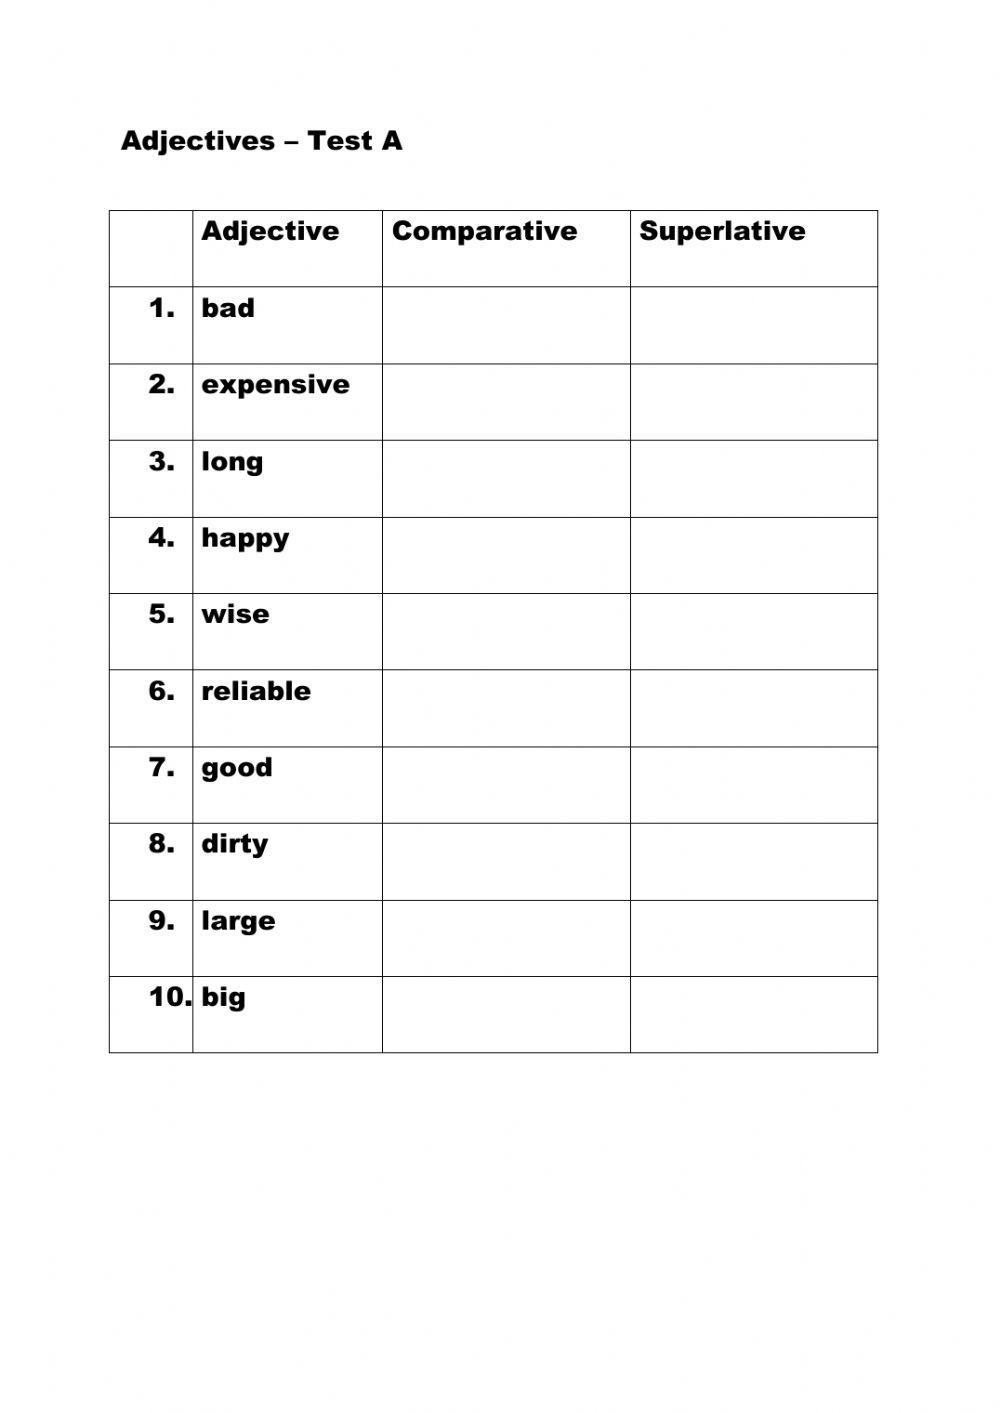 Adjectives: comparative and superlative